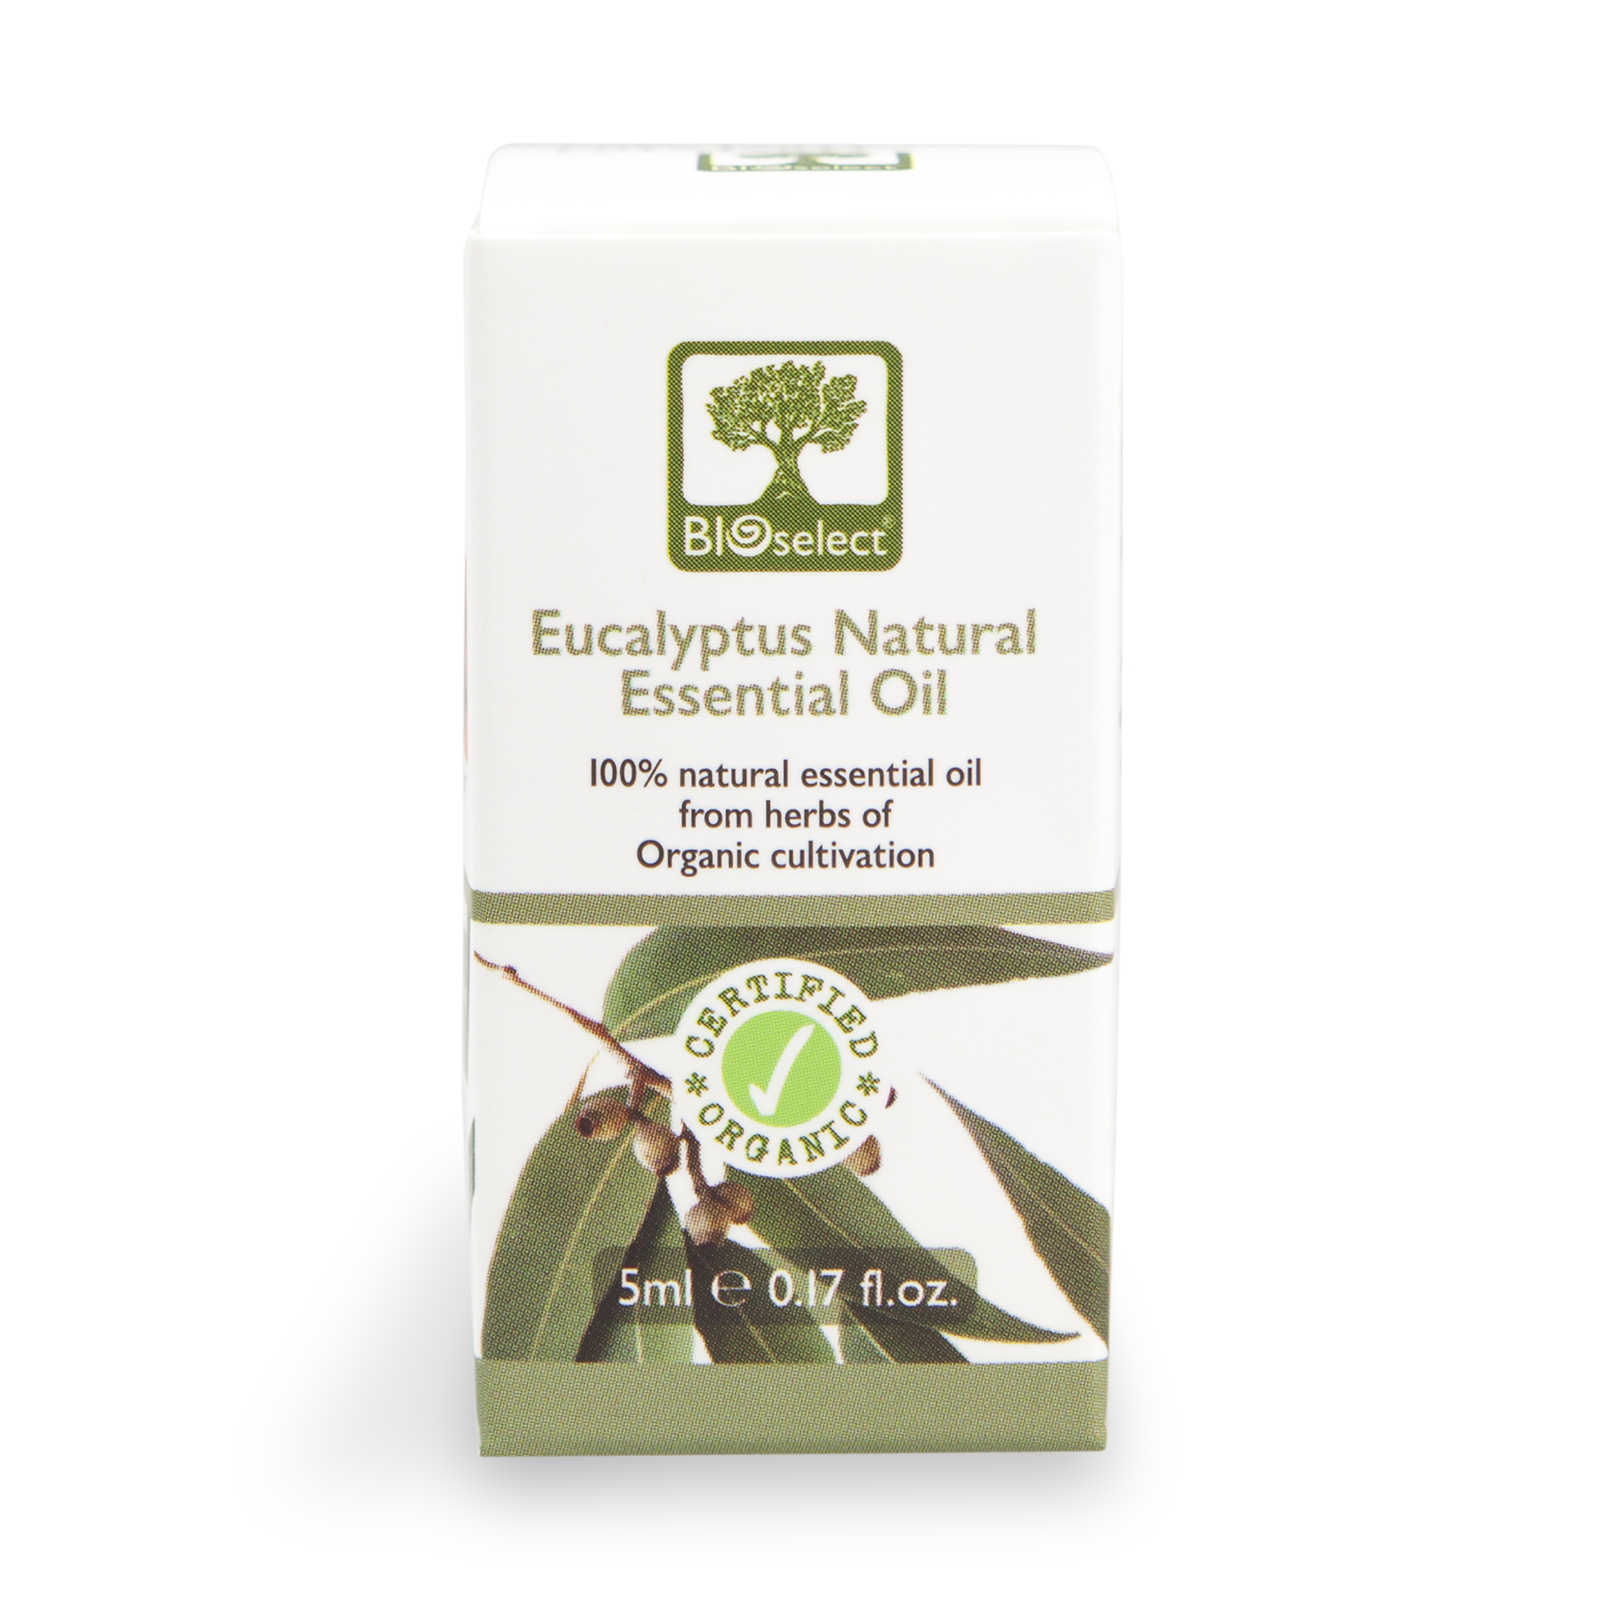 Bioselect Eucalyptus Natural Essential Oil Certified Organic